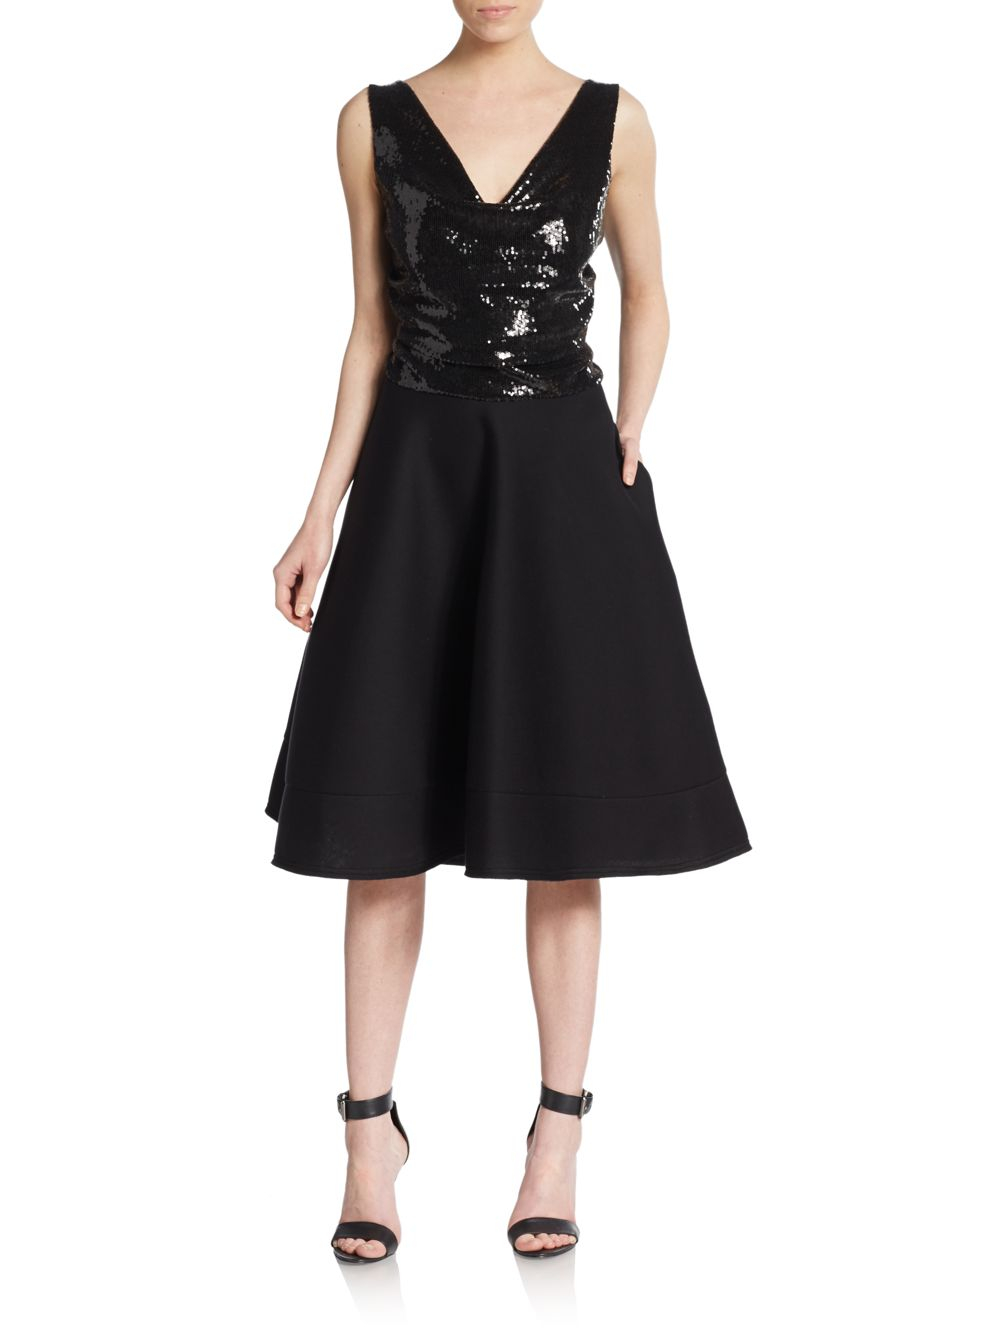 Lyst - Donna Karan Sequin-bodice Cocktail Dress in Black